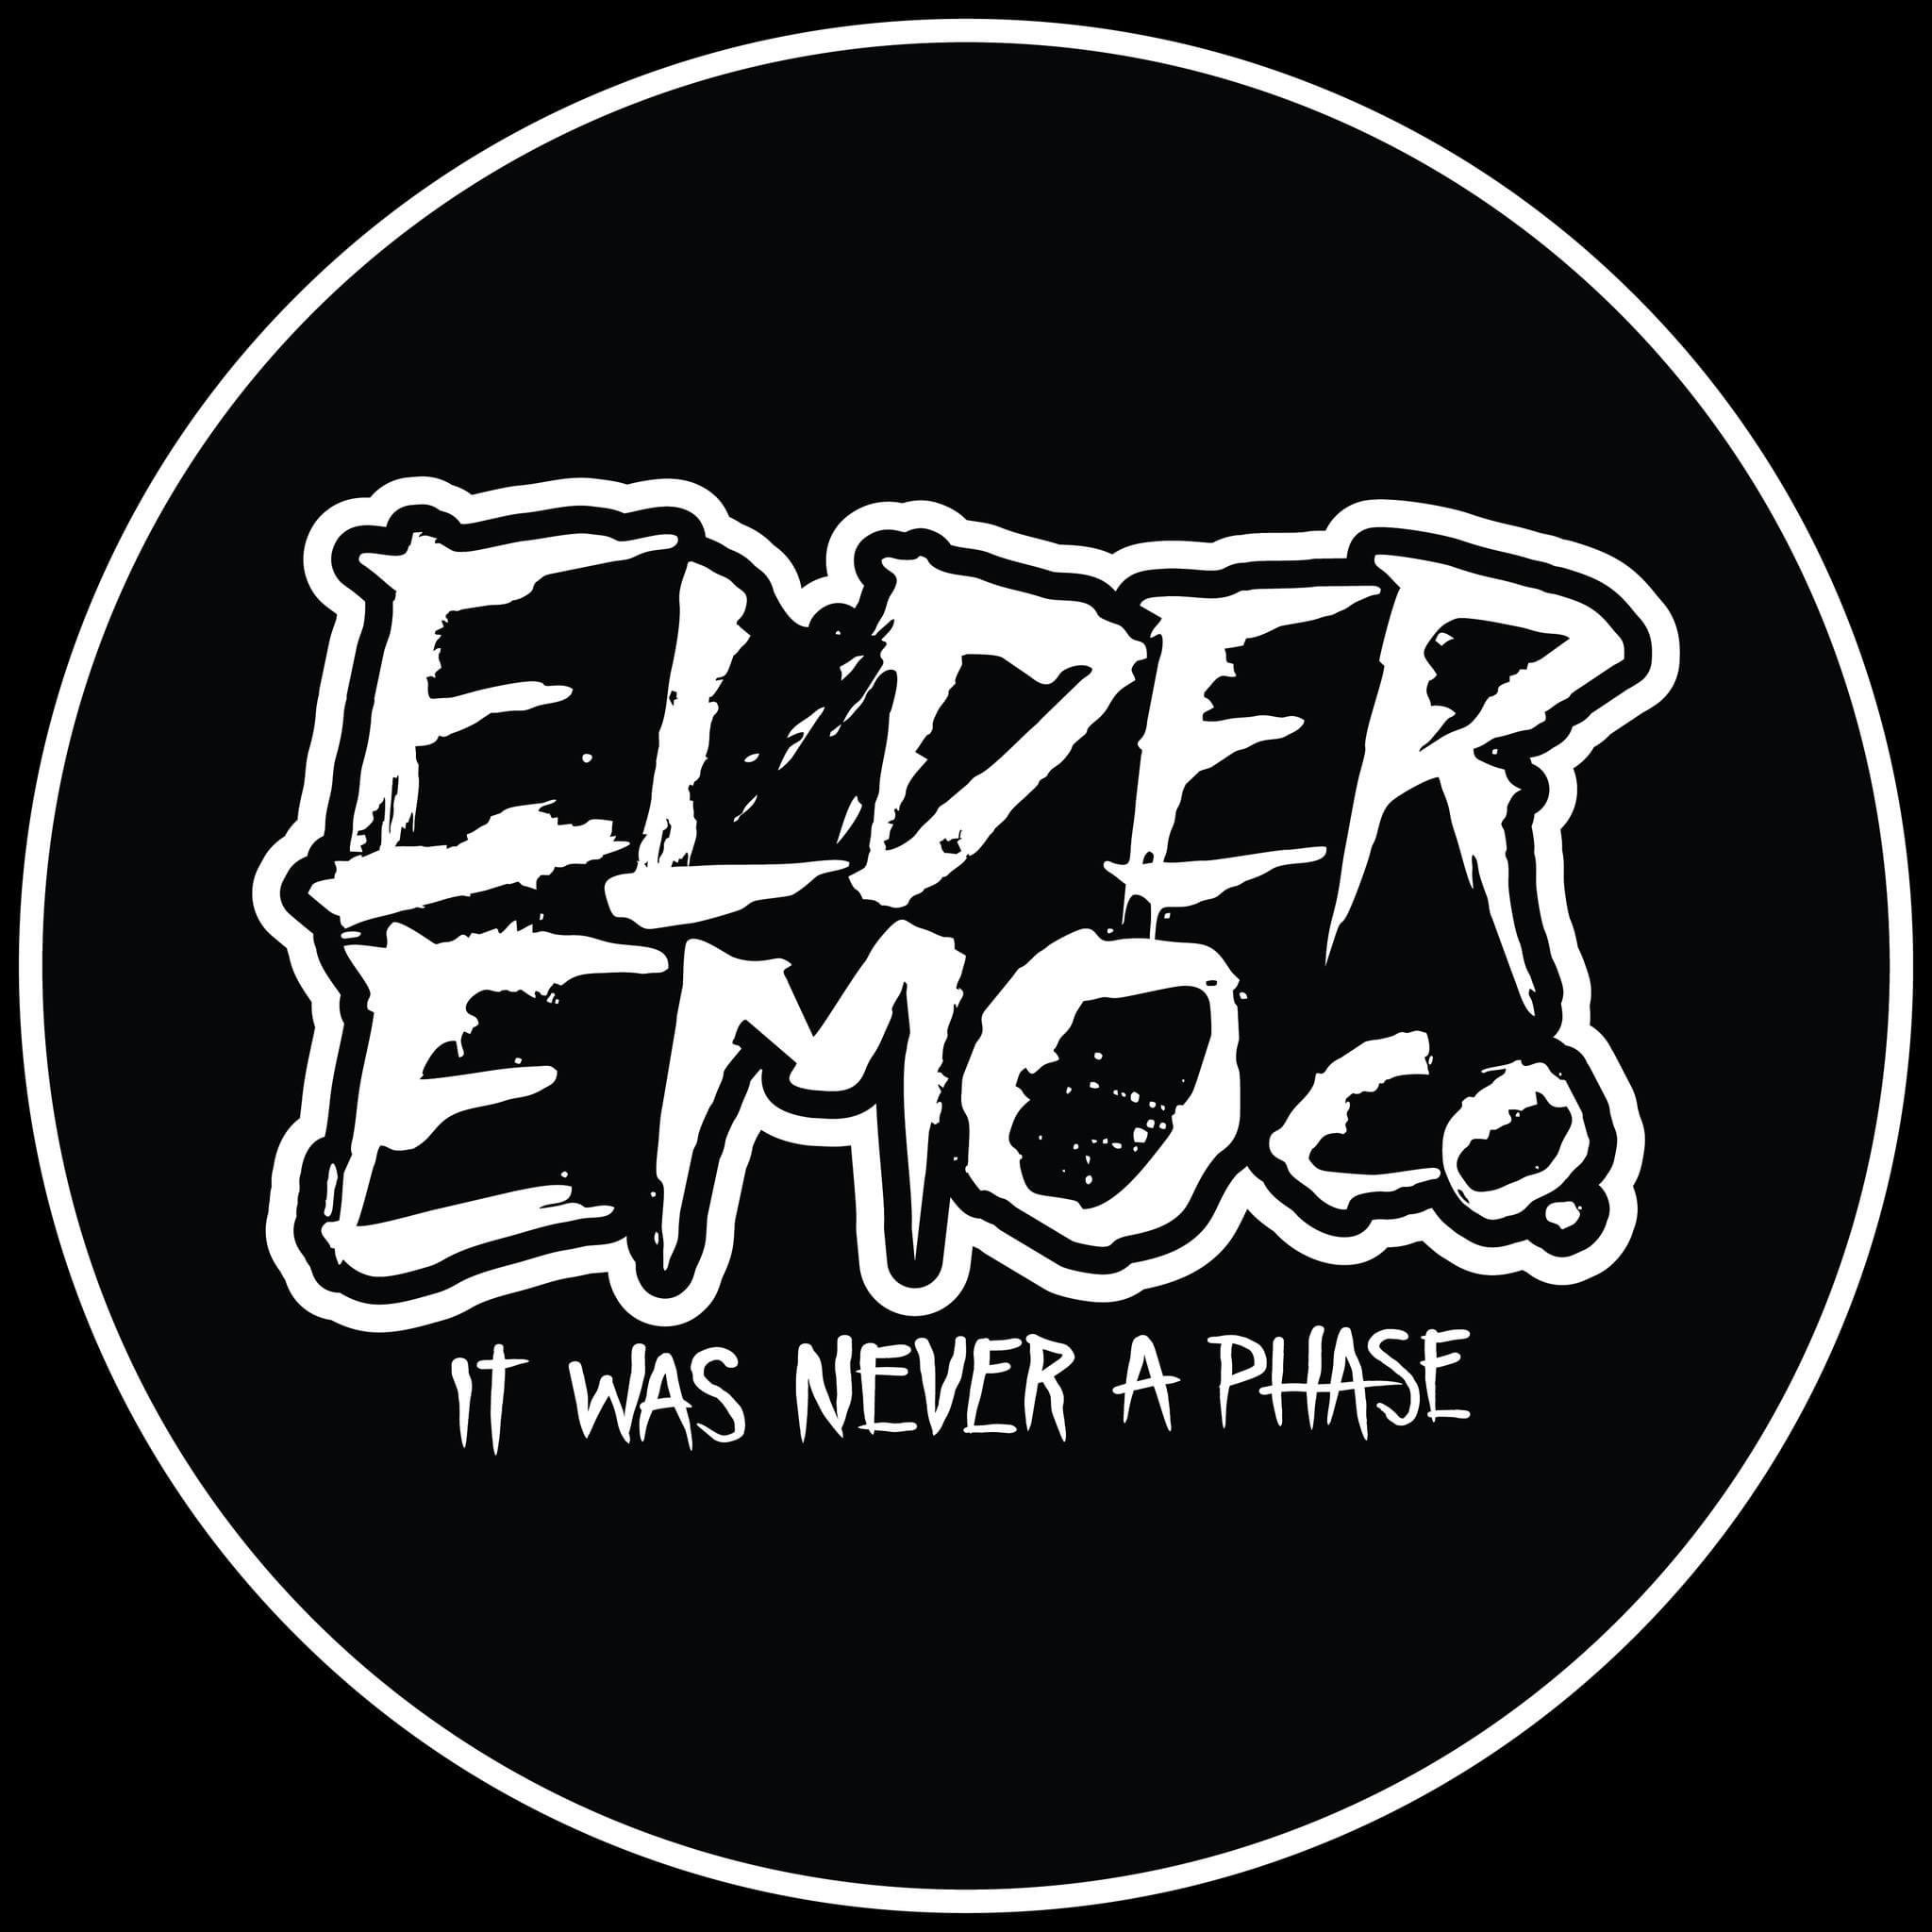 Elder Emo Hard Enamel Pin — Elder Emo Co.